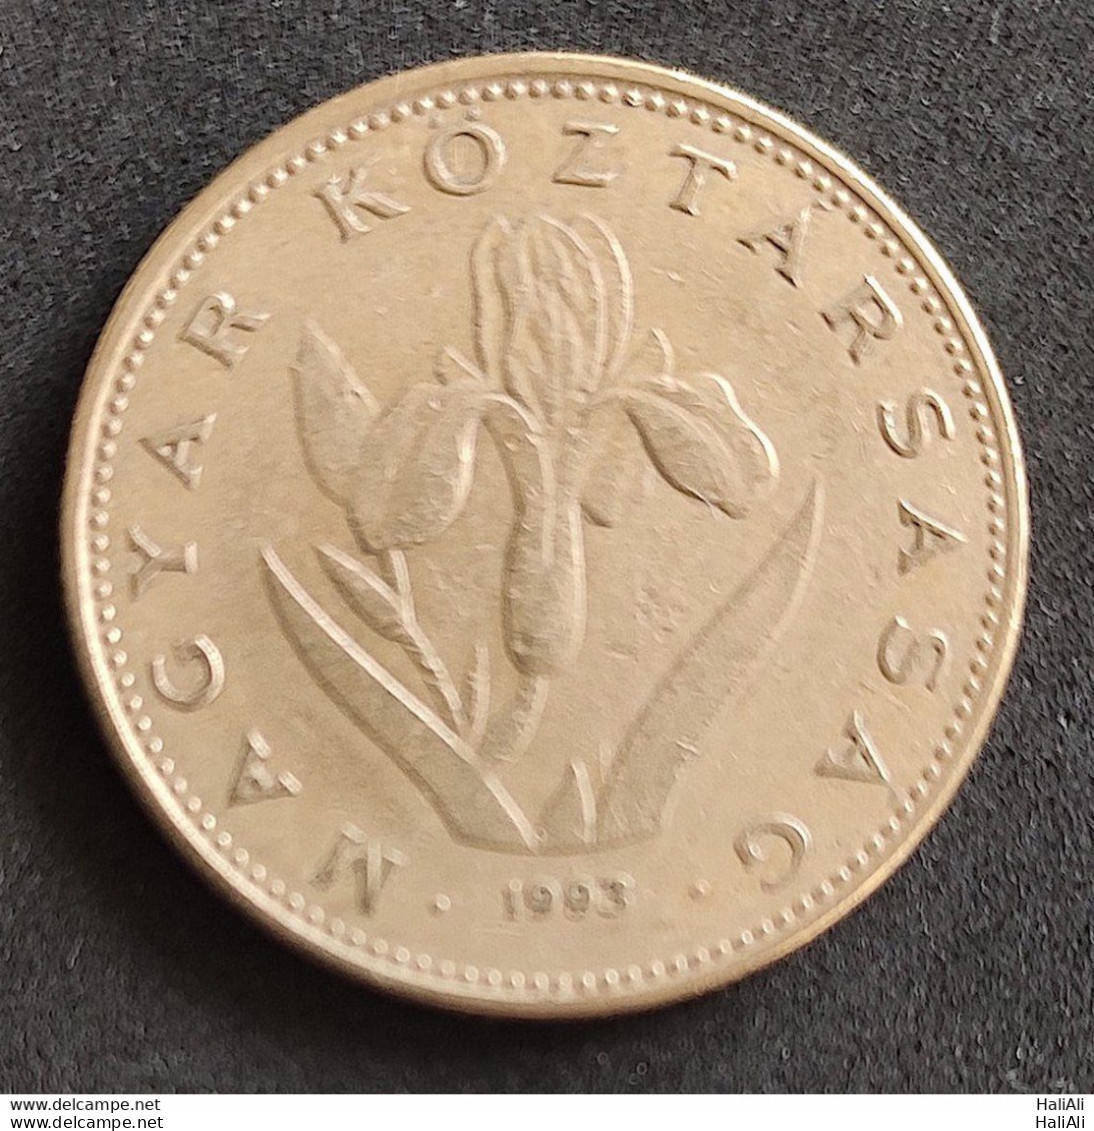 Coin Hungary 1993 20 Forint 1 - Hungría